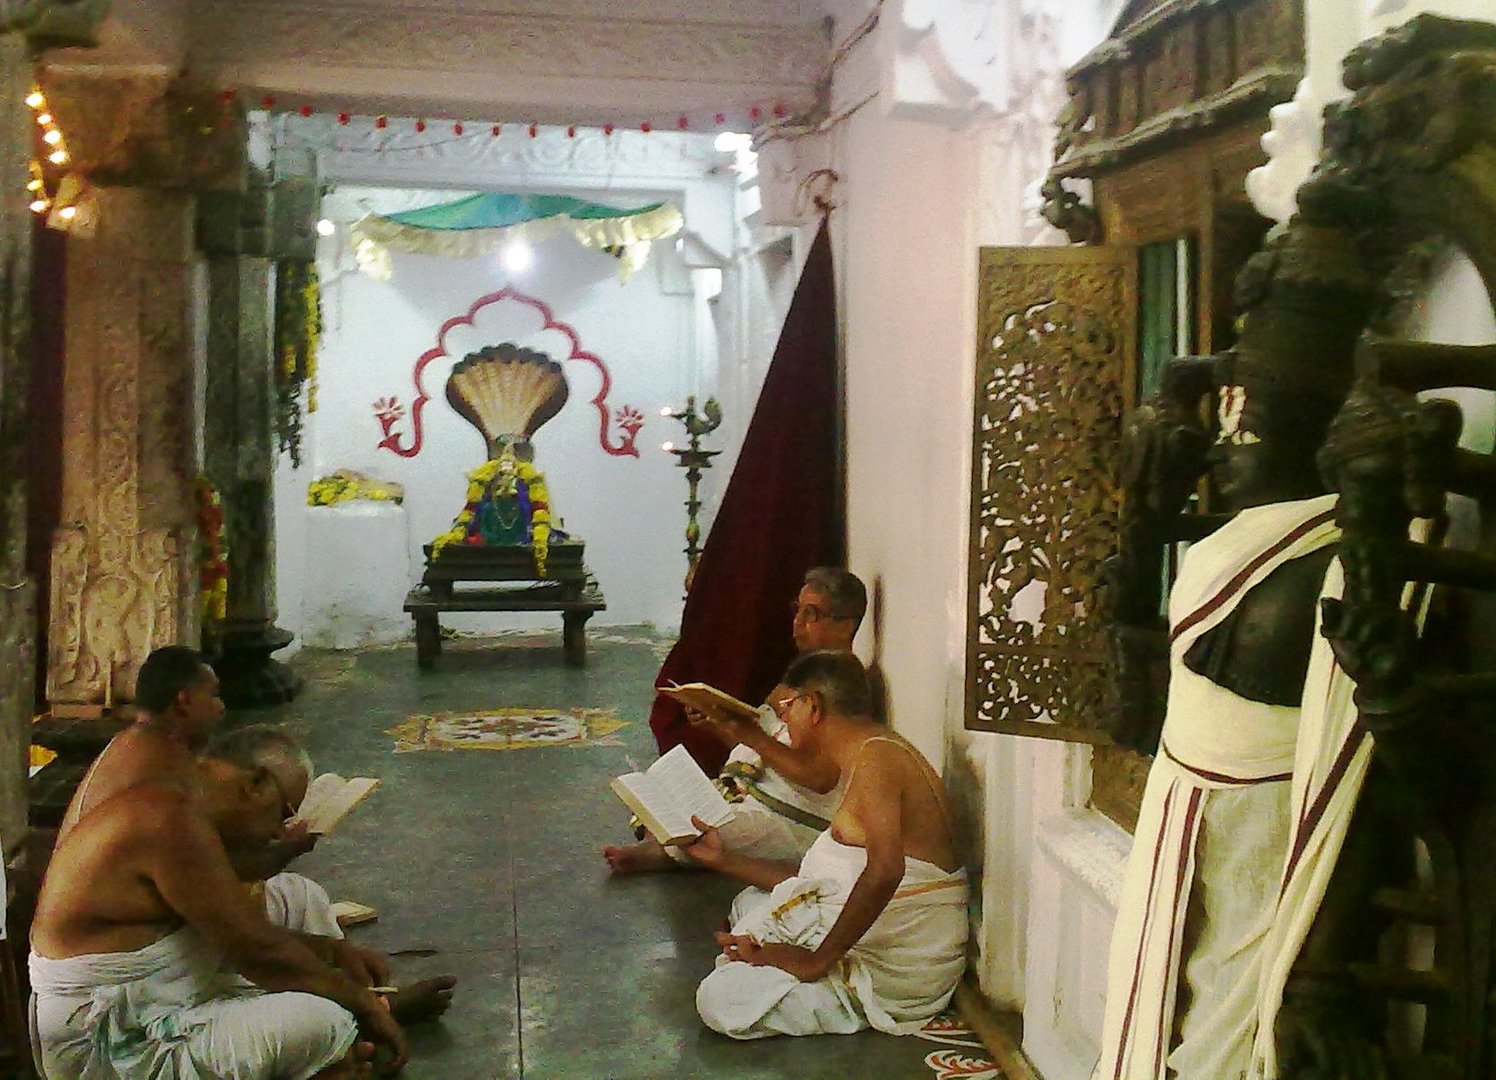 Hindu monks